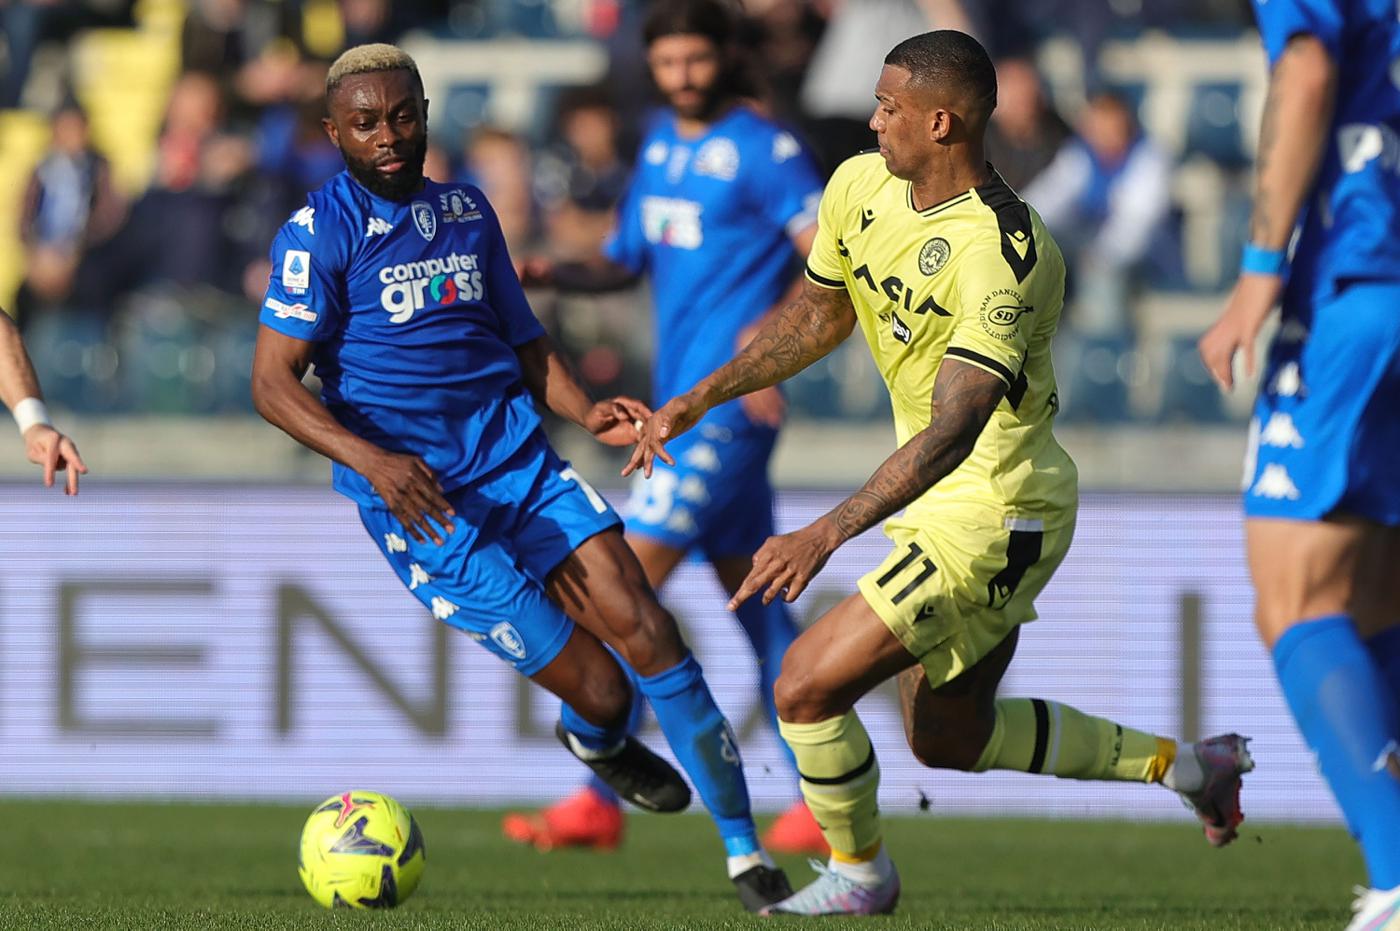 Empoli vs Udinese - 0-1. Italian Championship, round 26. Match review, statistics